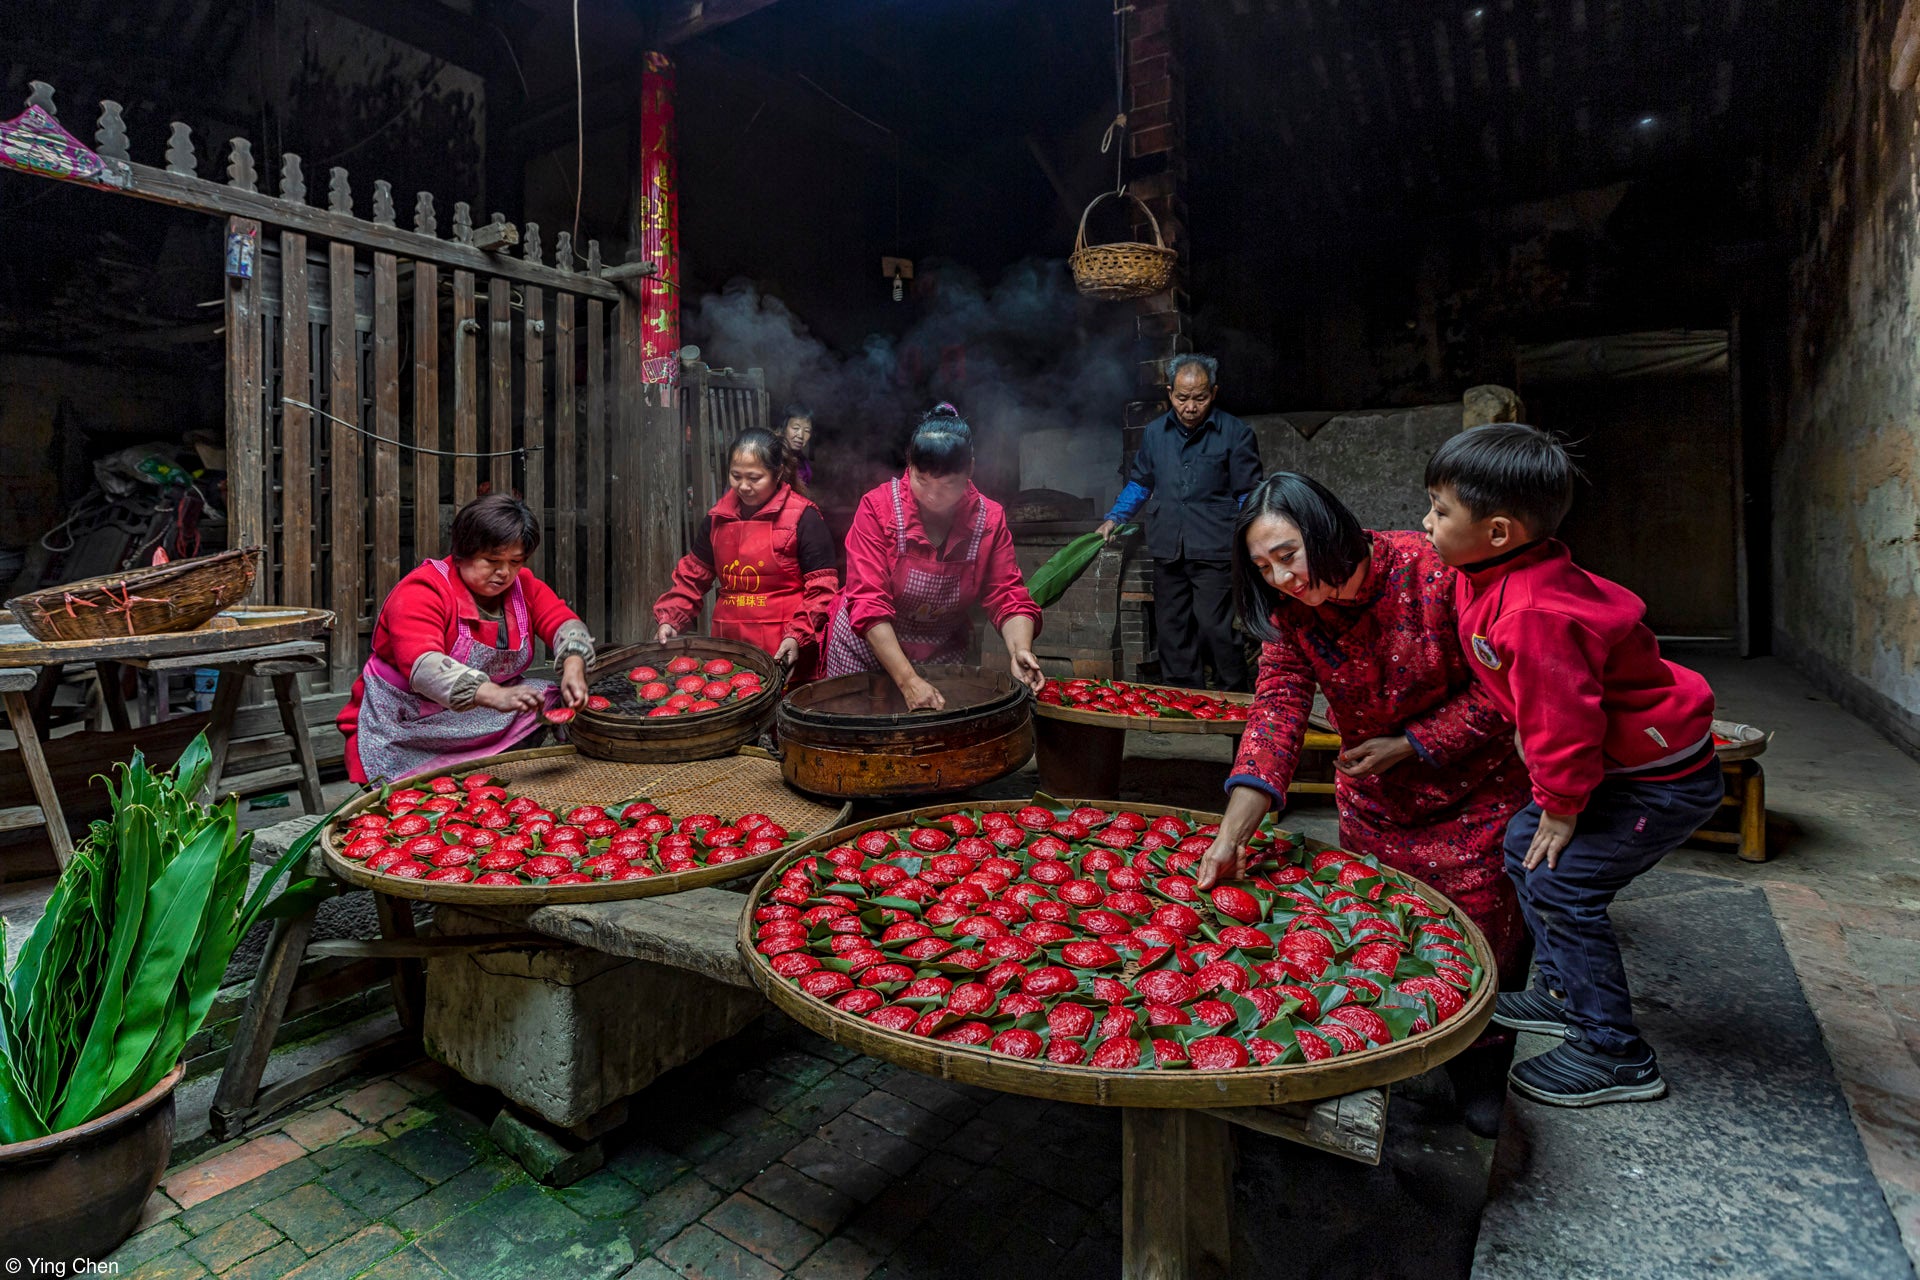 a family folds red dumplings